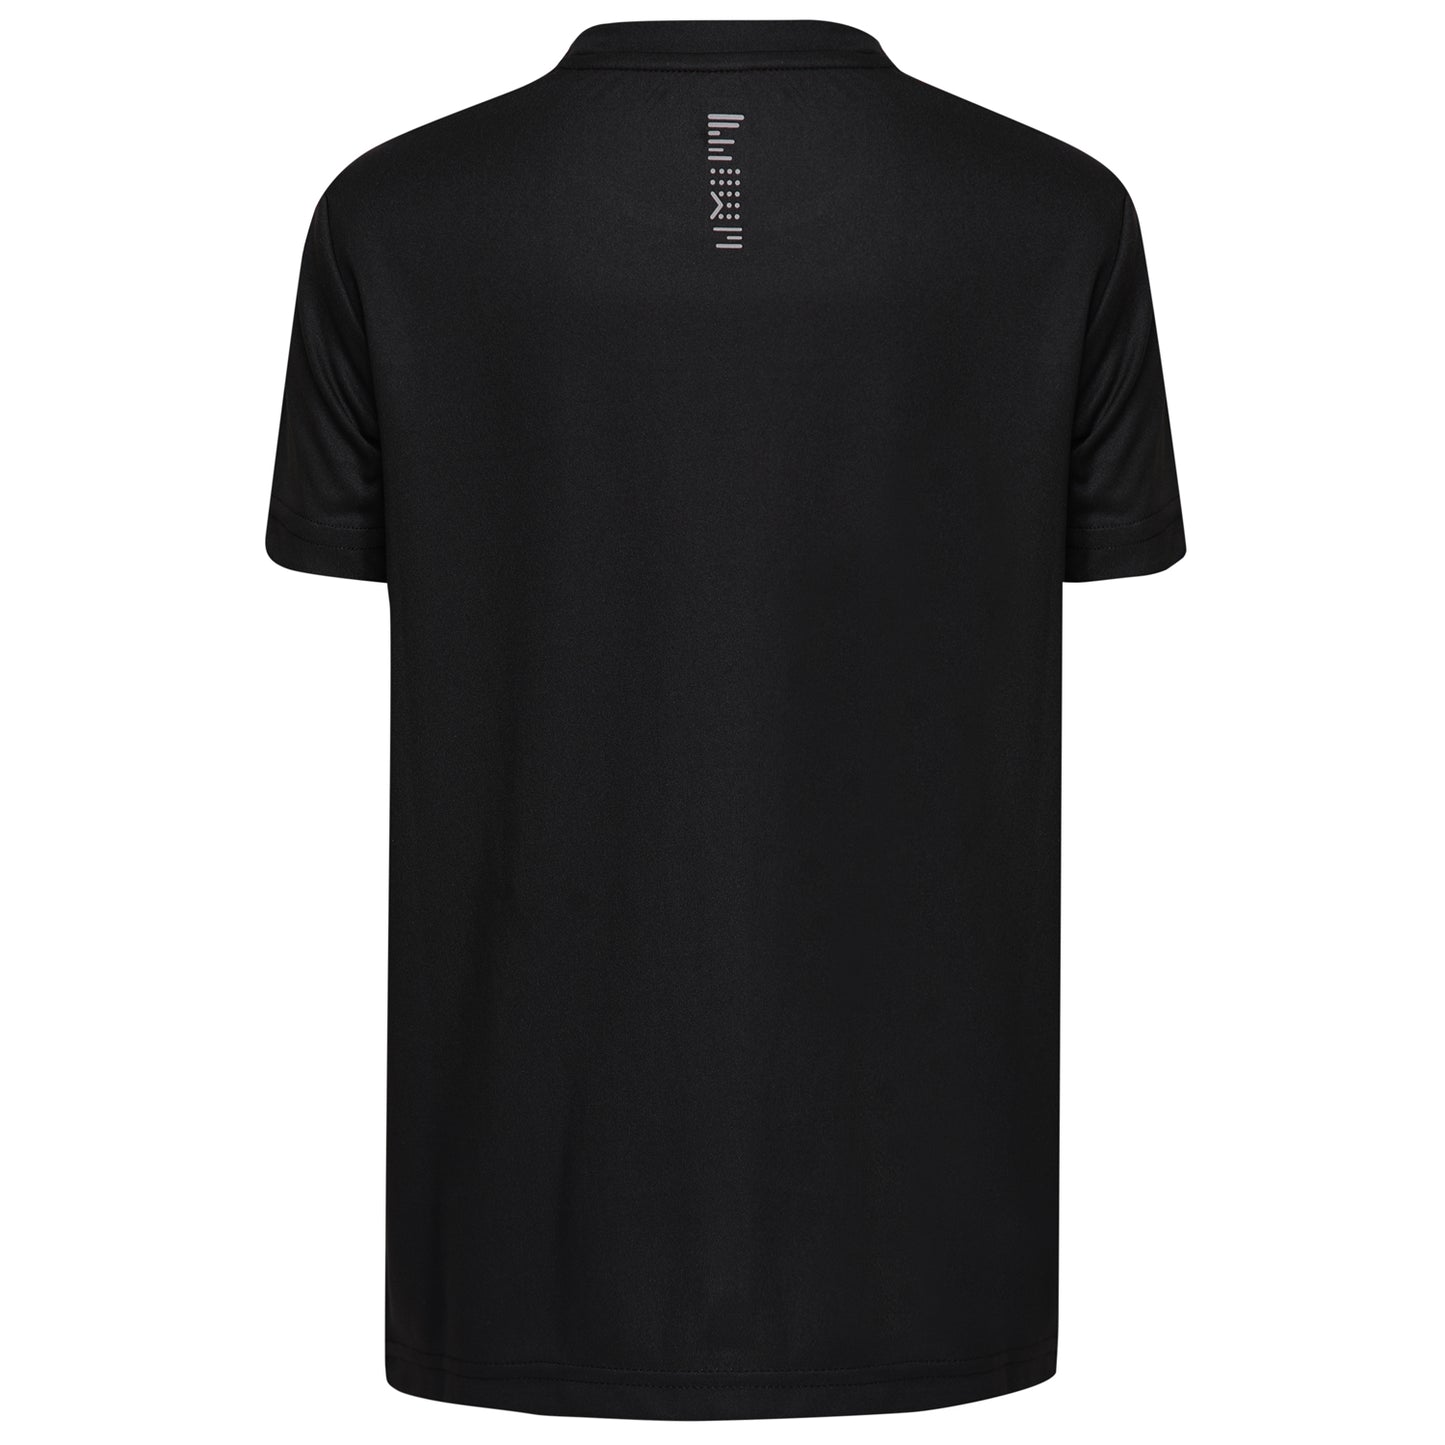 Yonex Round Neck Badminton T-Shirt, Jet Black/Cyber Yellow - Best Price online Prokicksports.com